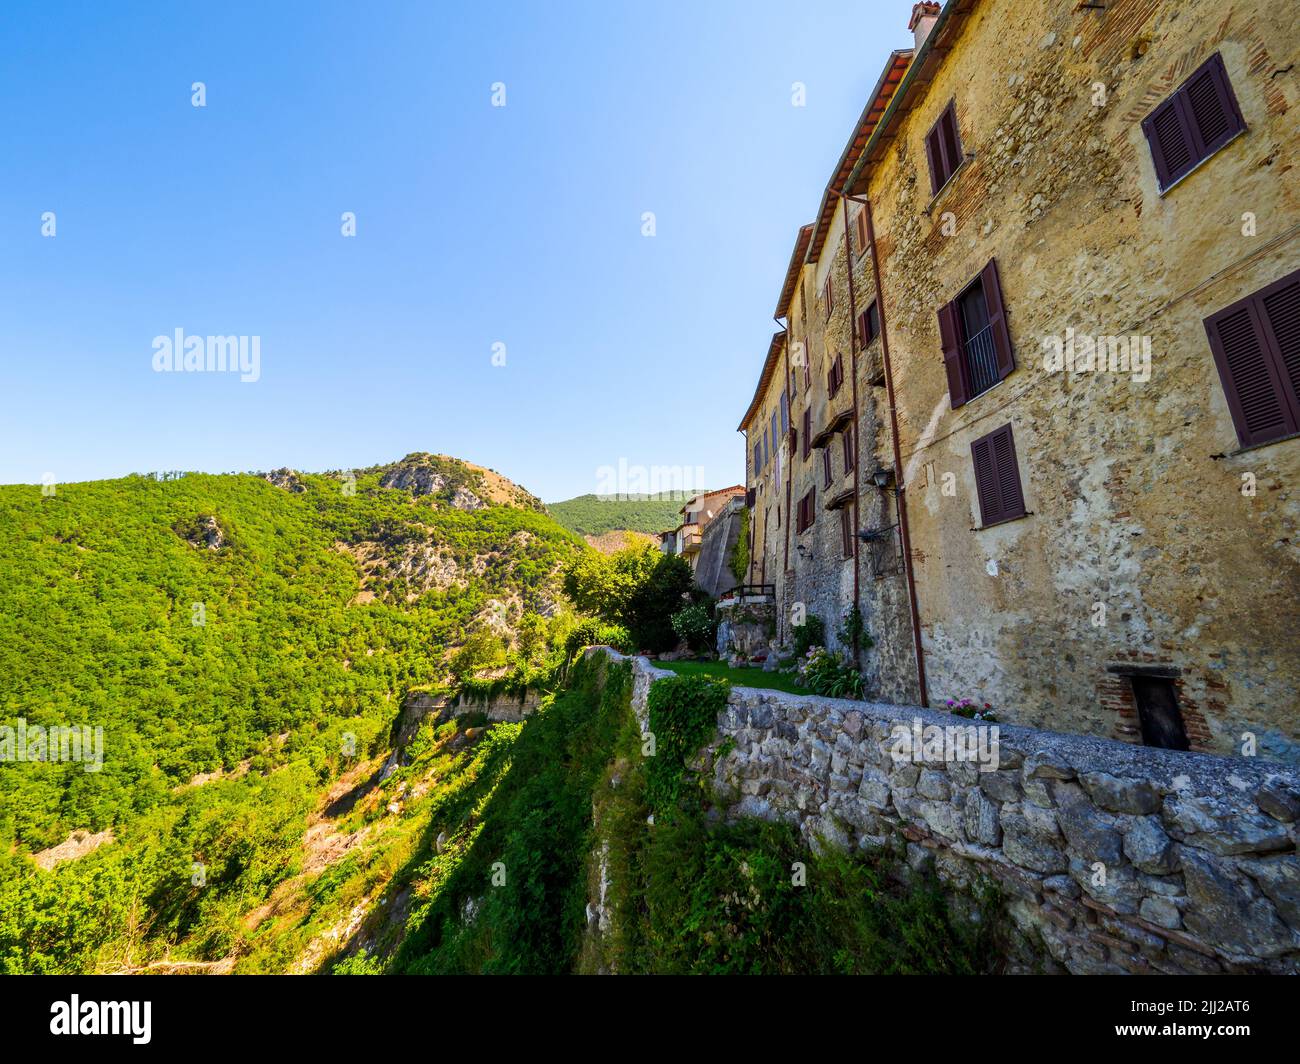 Medieval town of Rocca Sinibalda - Rieti, Italy Stock Photo